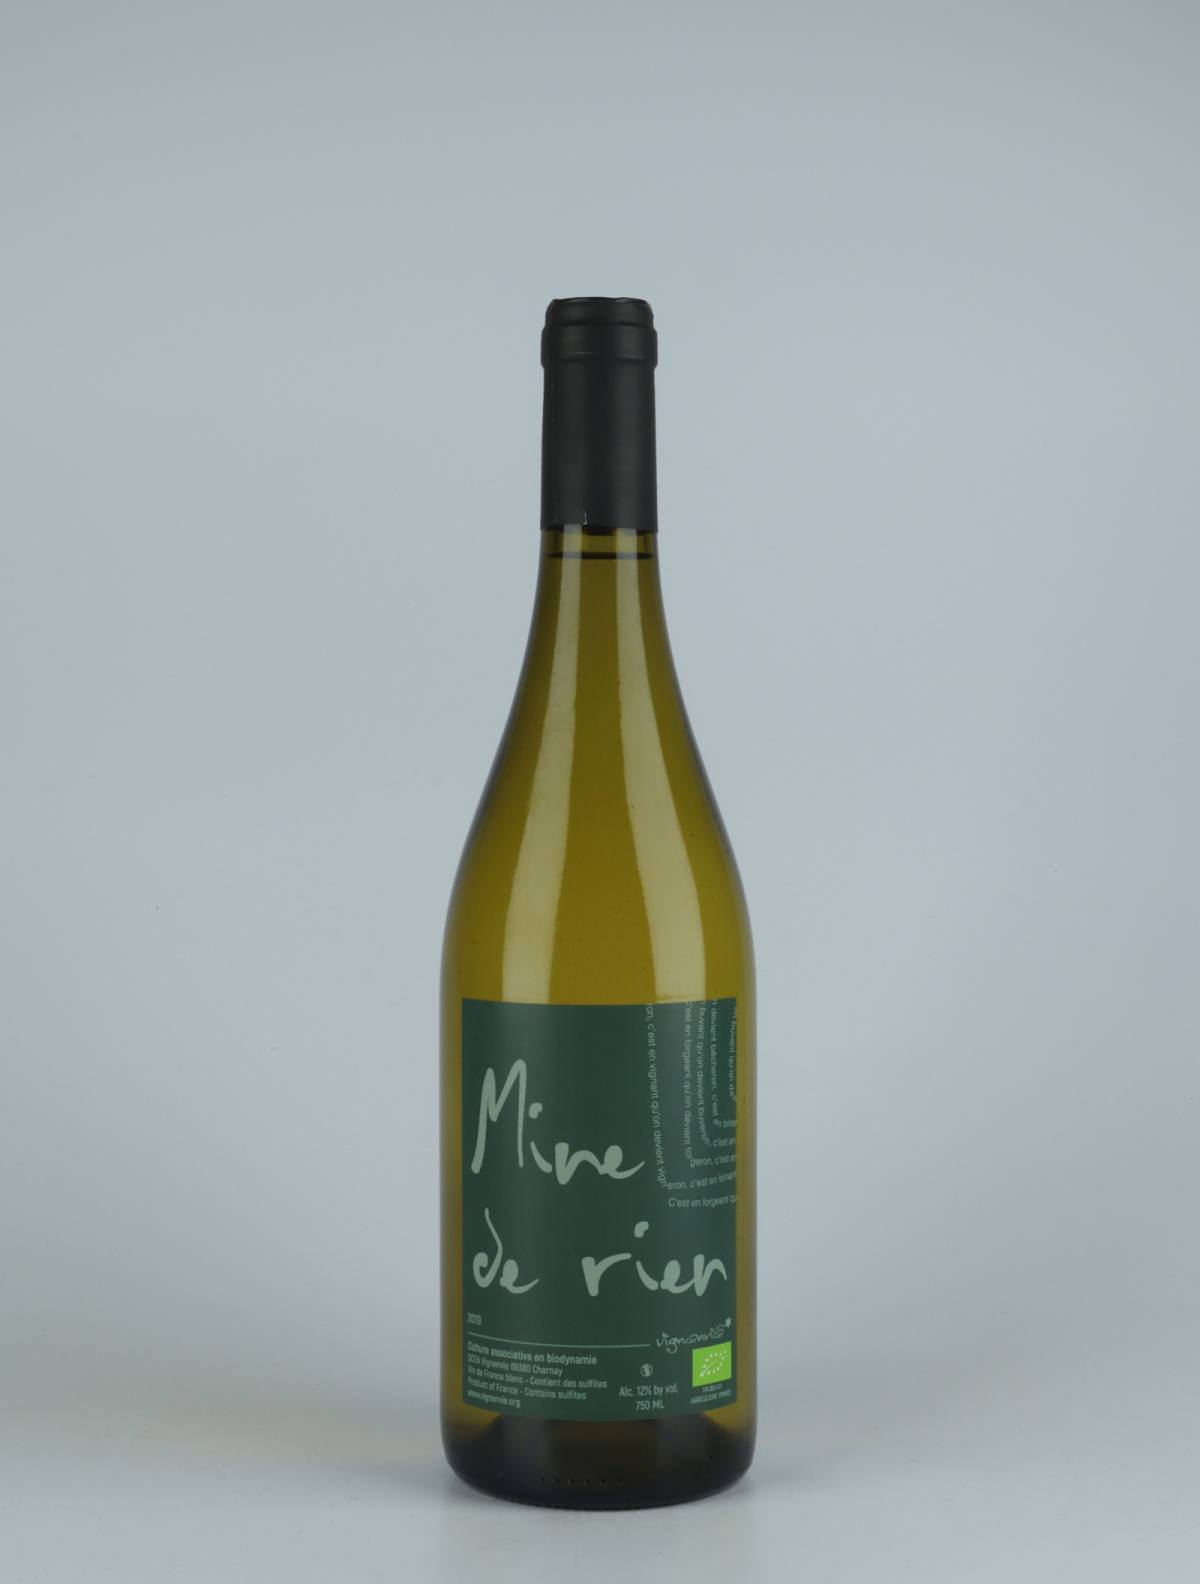 A bottle 2019 Mine de Rien White wine from Vignenvie, Beaujolais in France